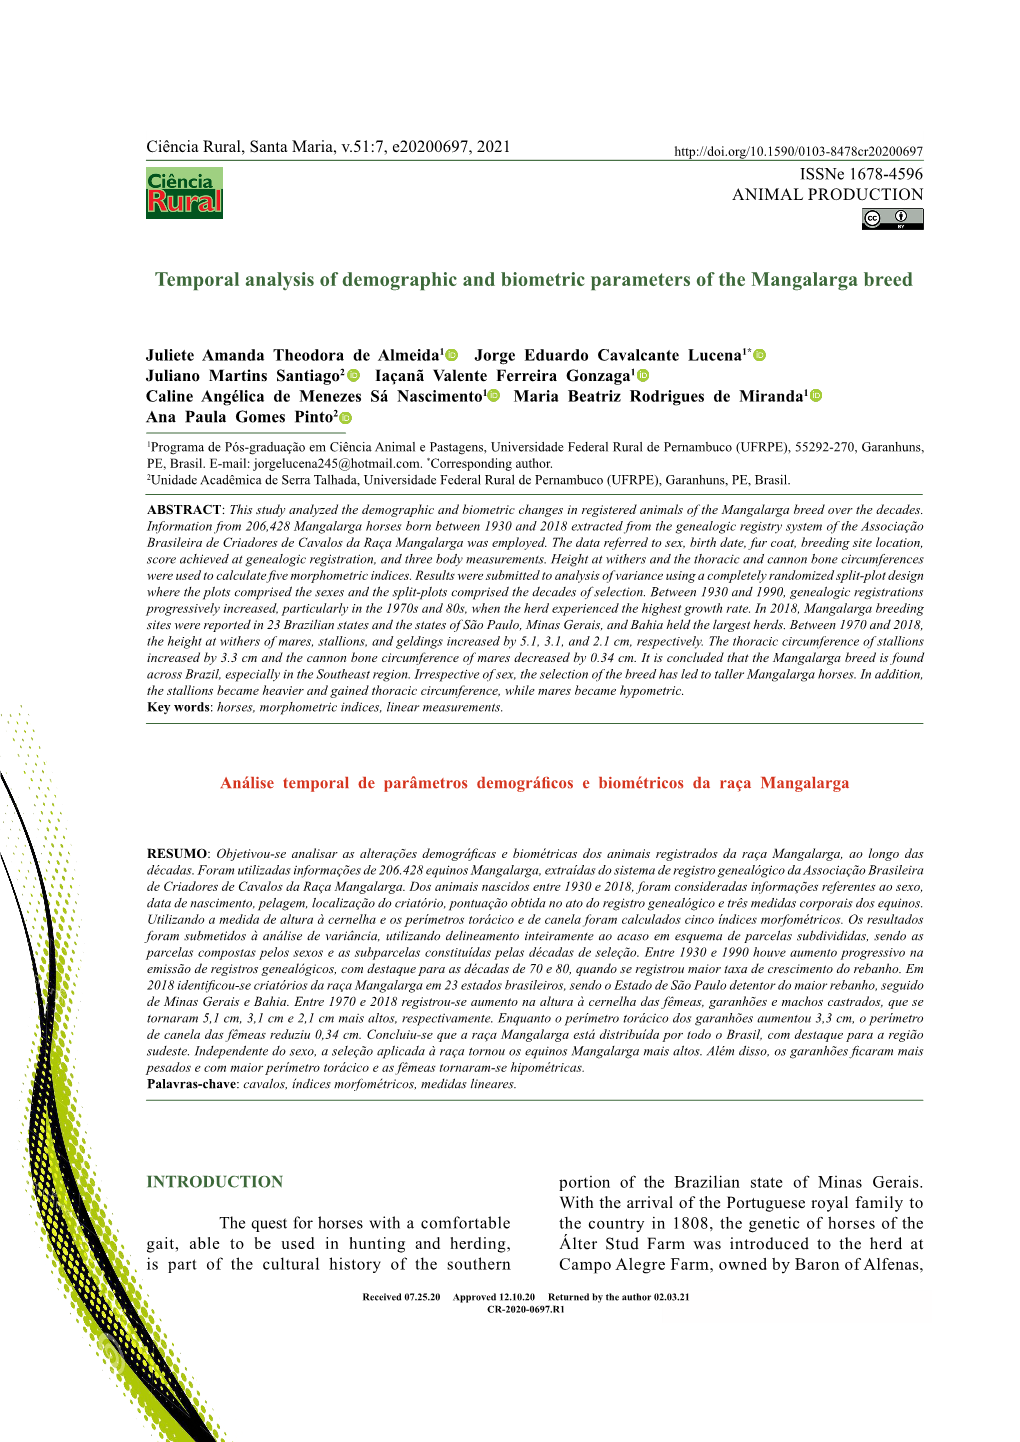 Temporal Analysis of Demographic and Biometric Parameters of the Mangalarga Breed